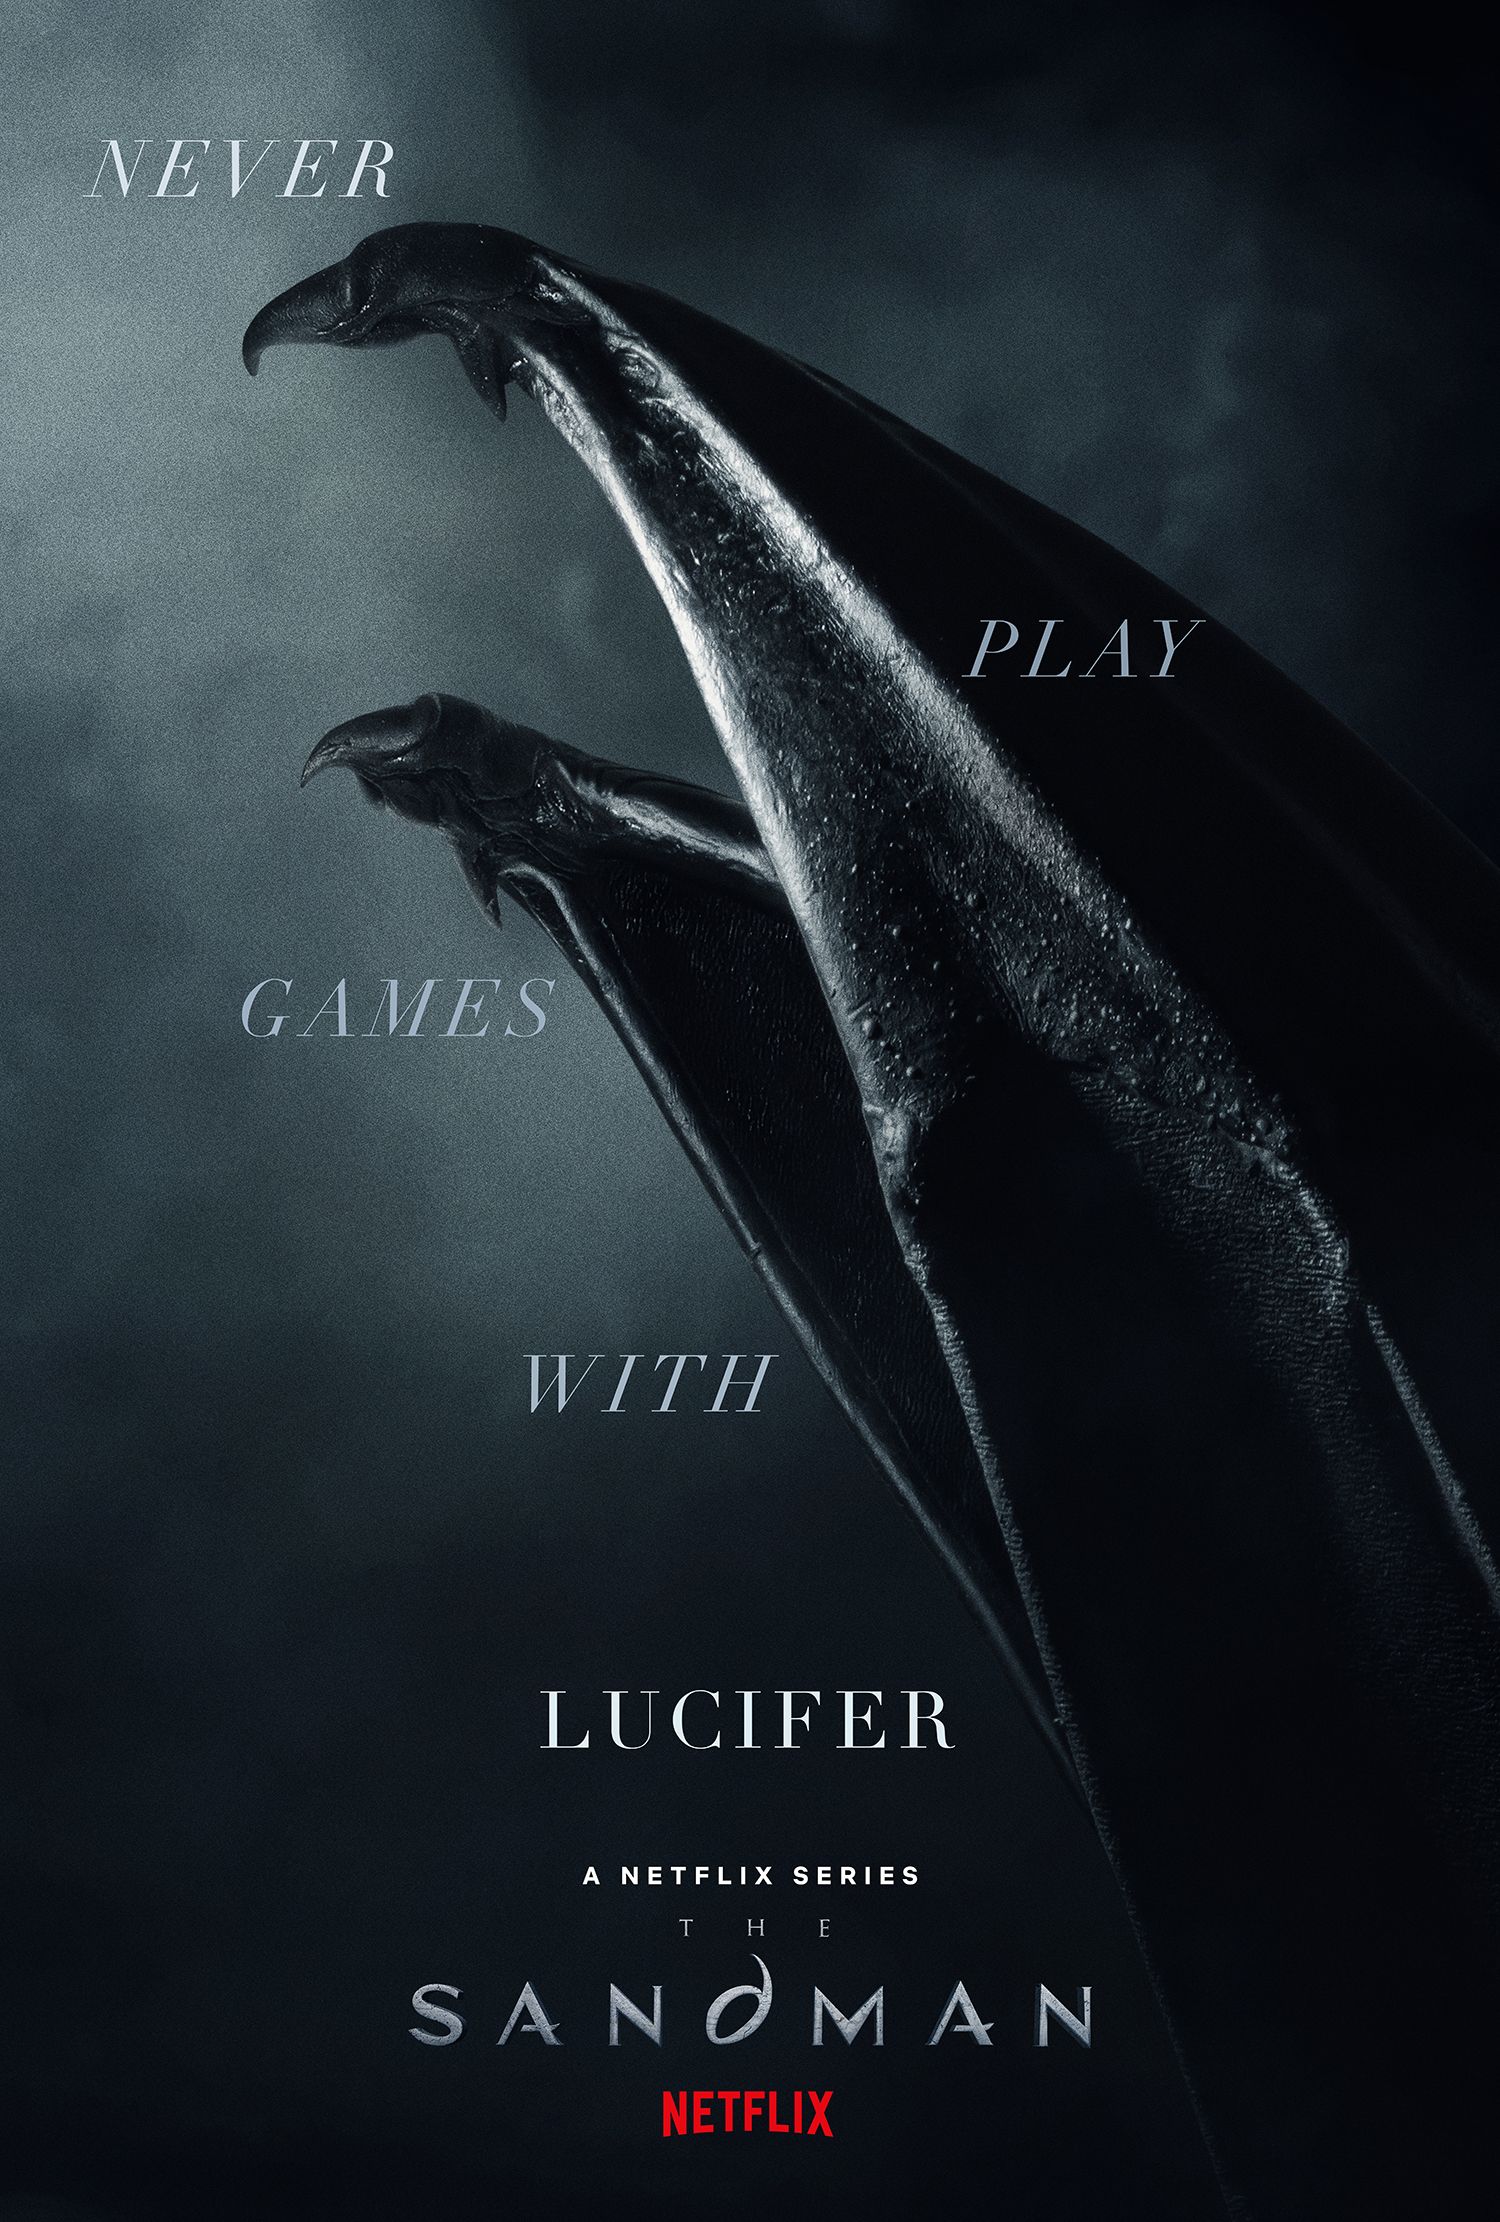 Lucifer wings on The Sandman poster